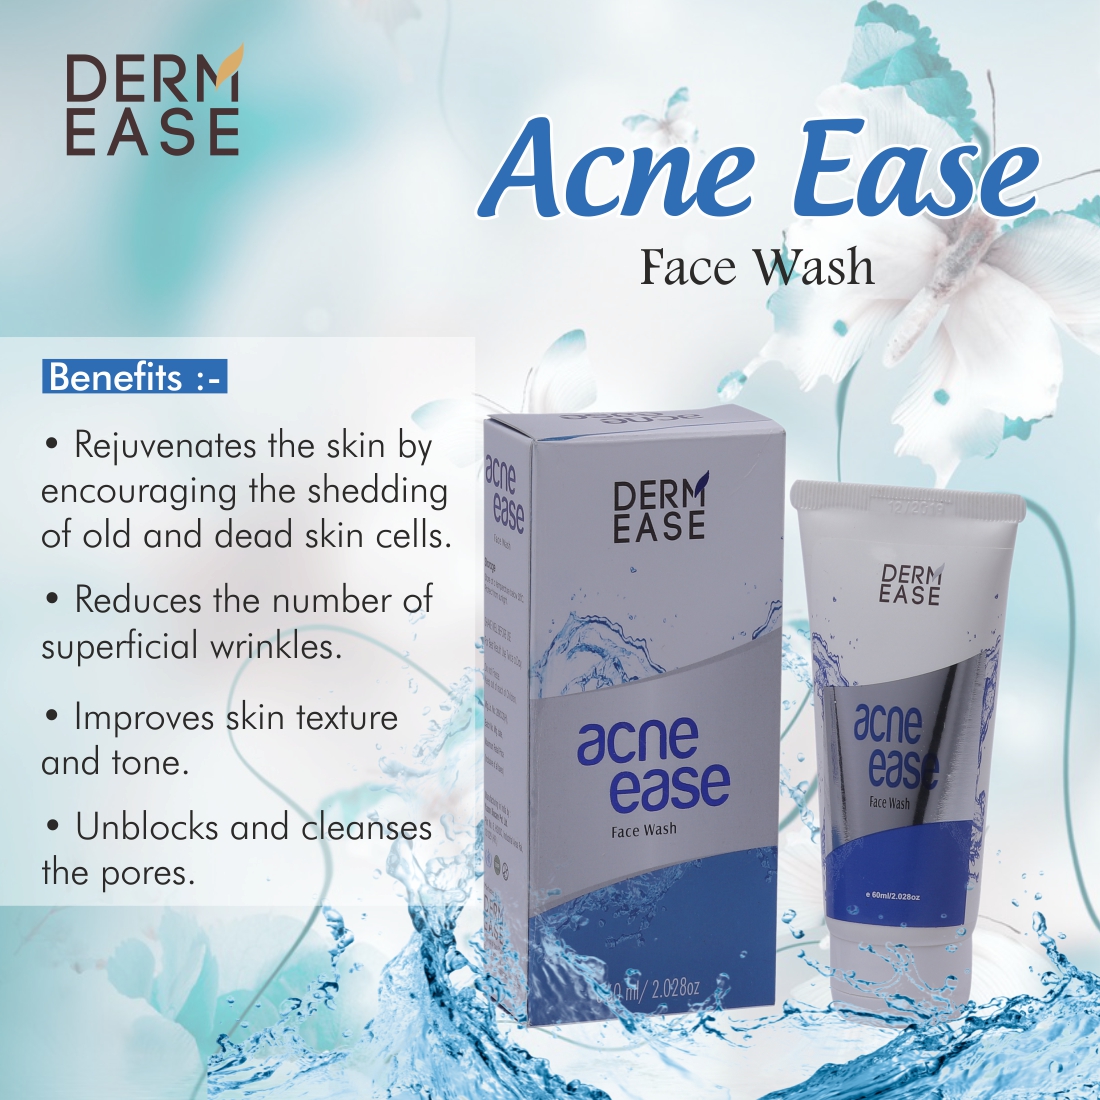 DERM EASE Acne Ease Face Wash Combo